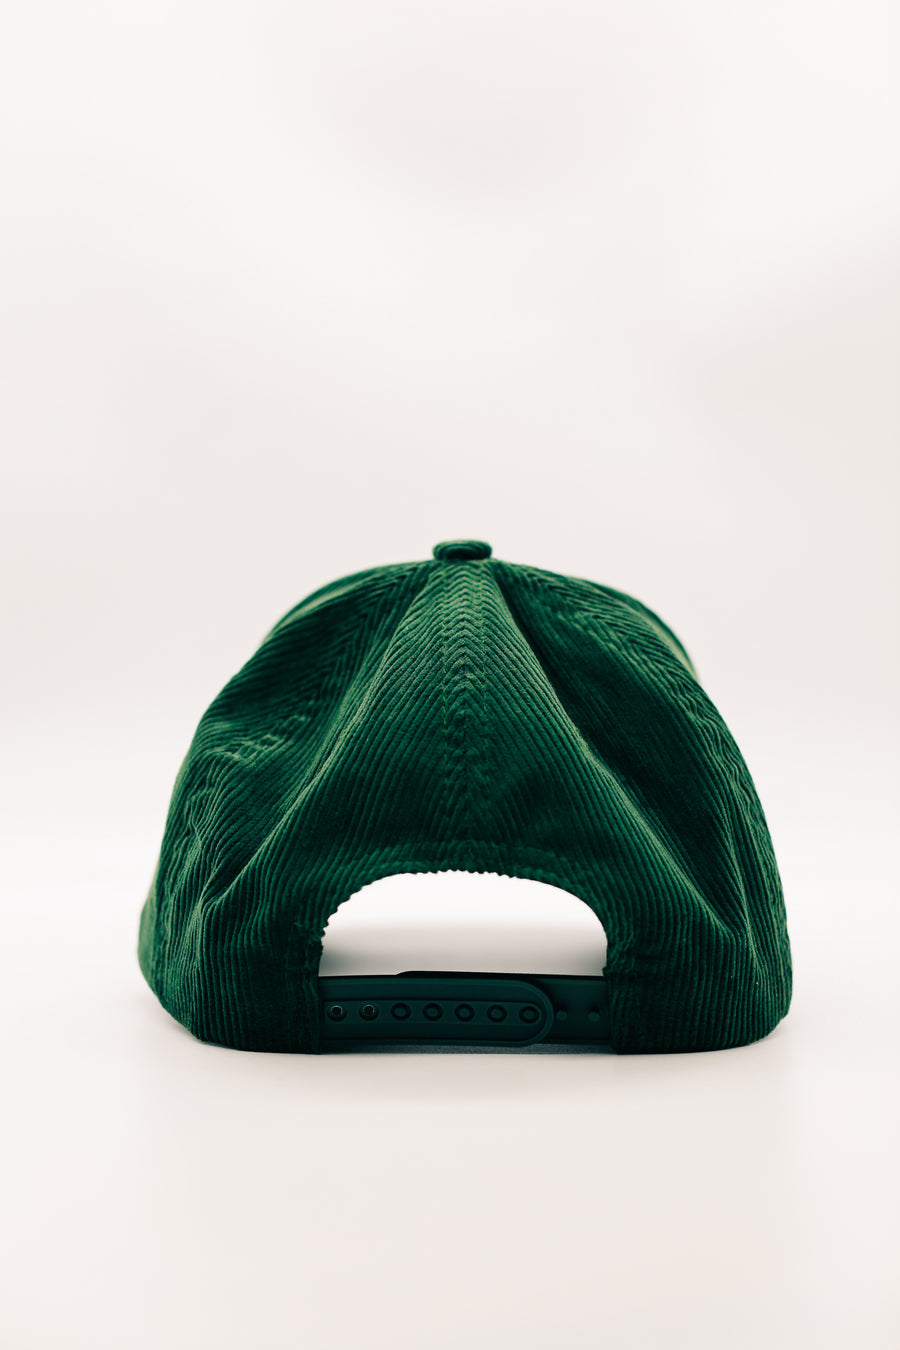 SOLECIETY CORDUROY CAP GREEN